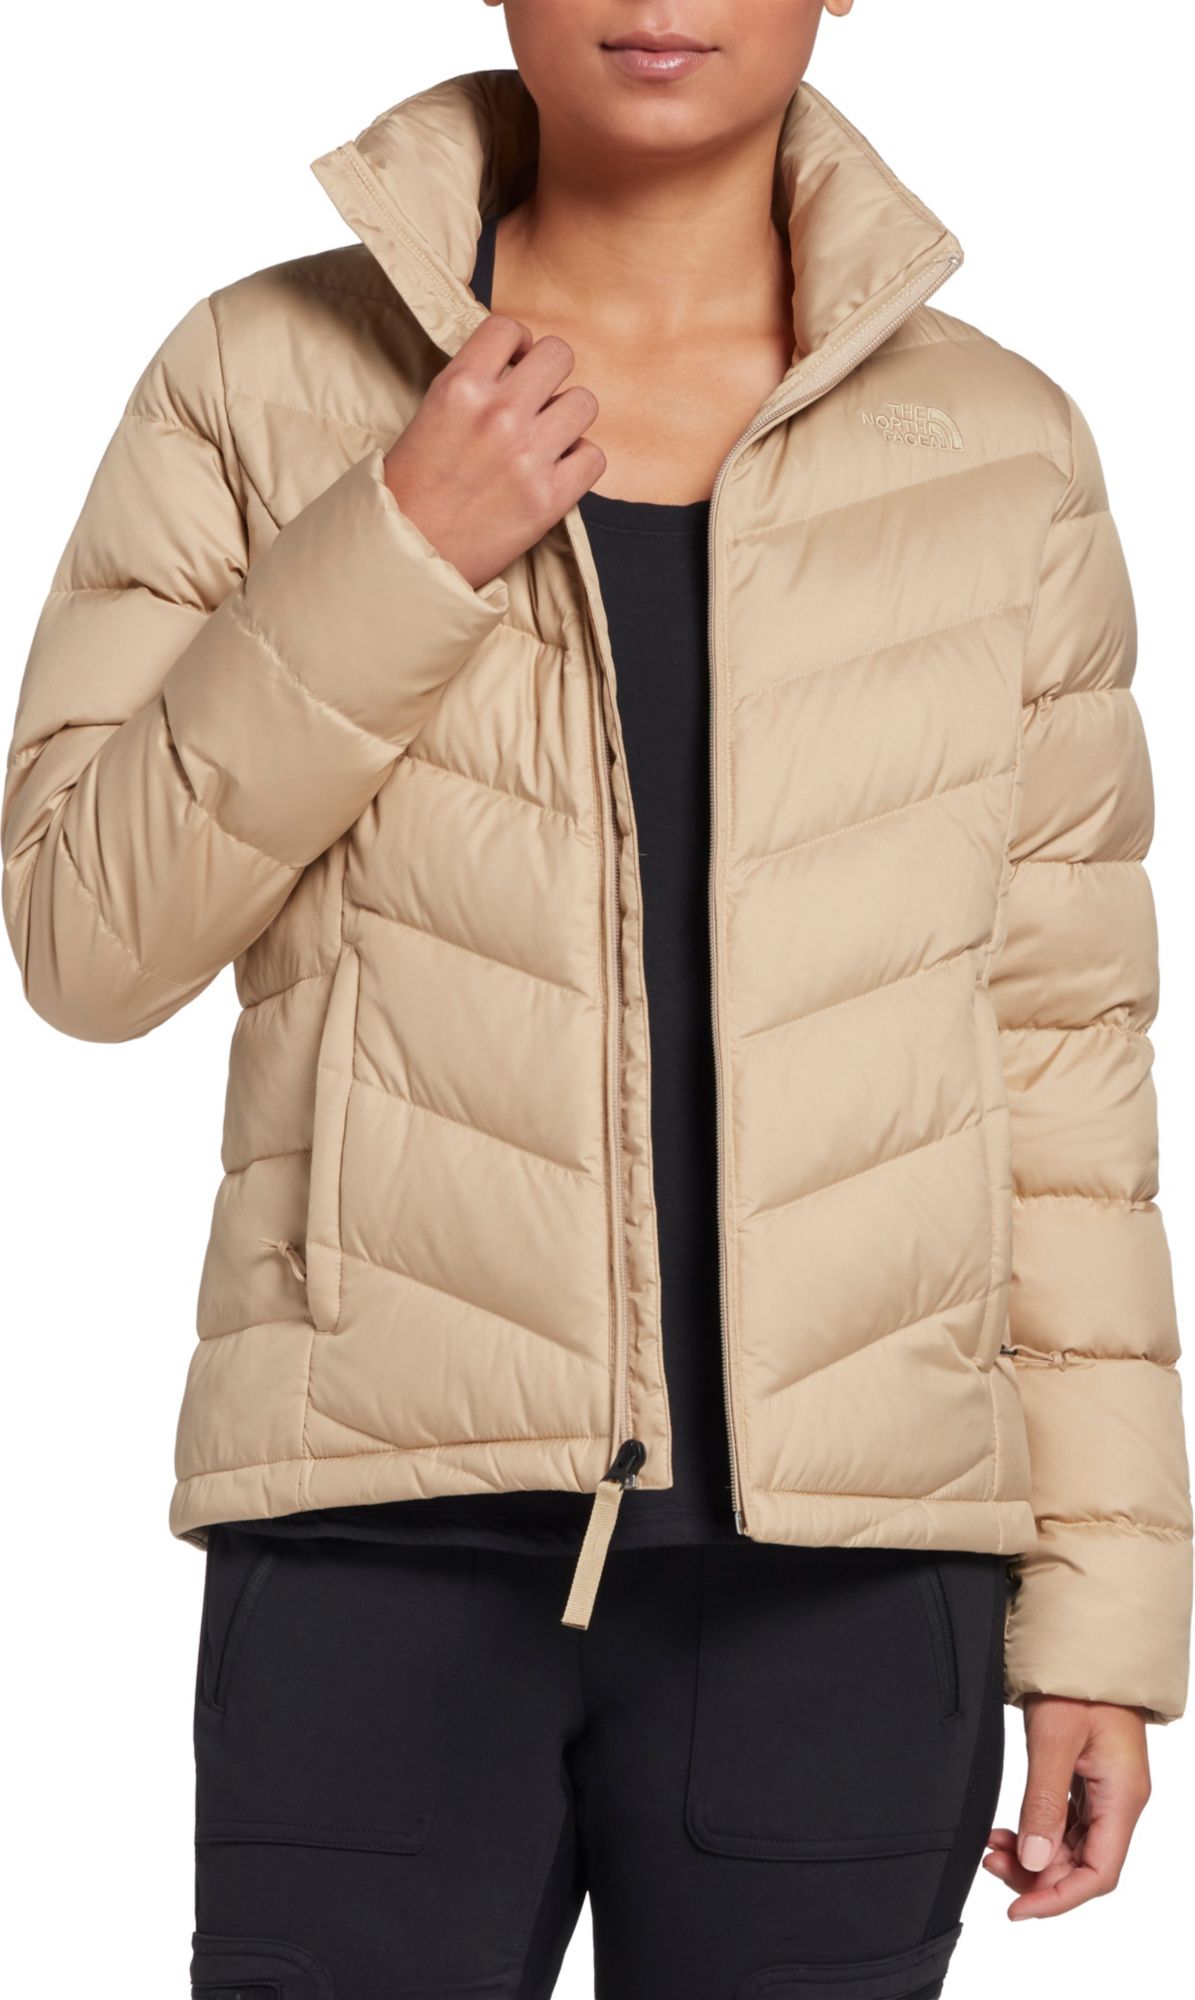 north face alpz jacket